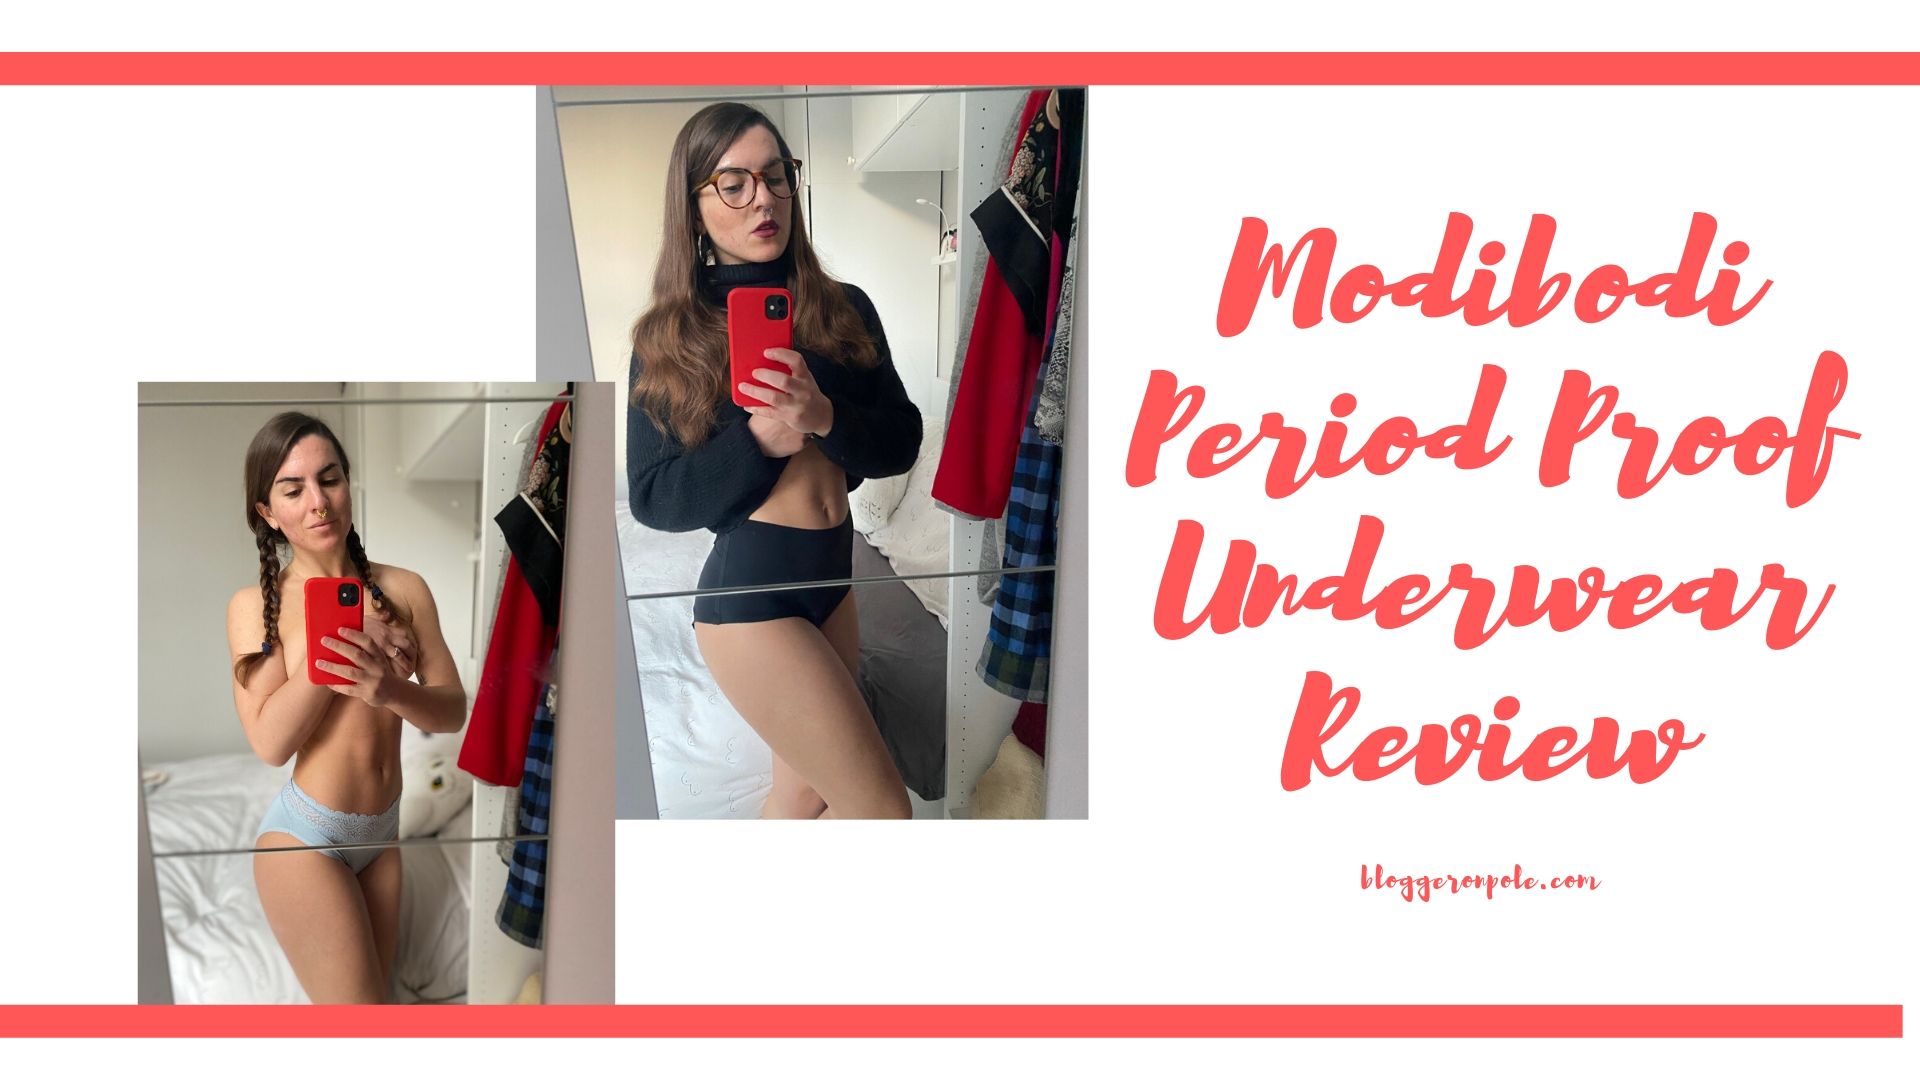 Modibodi Period Proof Underwear Review - Blogger On Pole